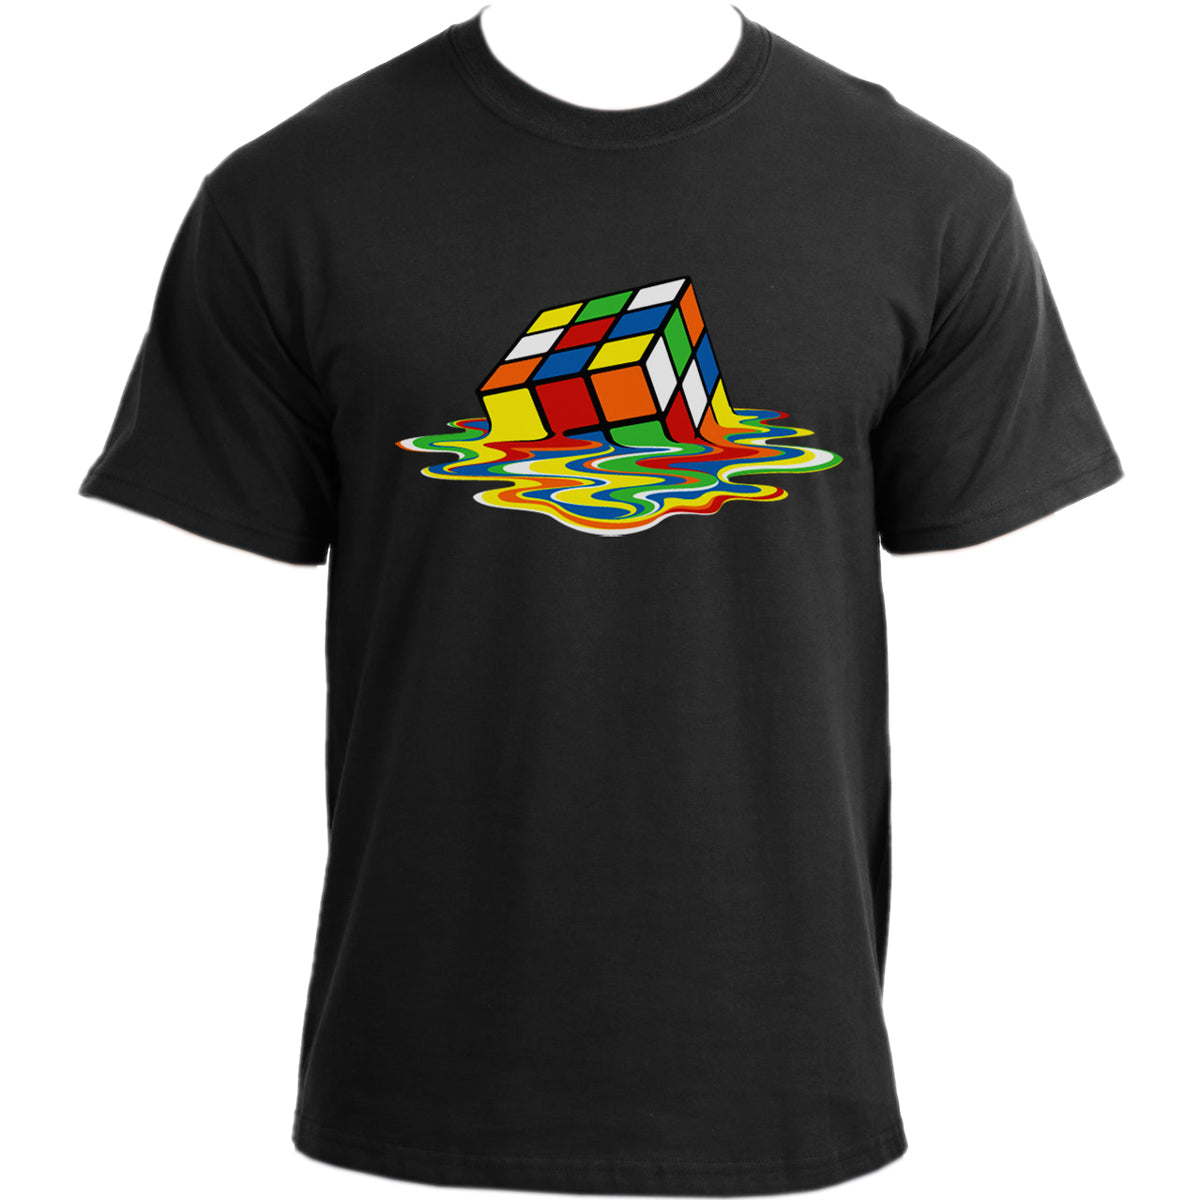 Big Bang Theory Sheldon Cooper Melted Rubiks Cube Inspired T-Shirt